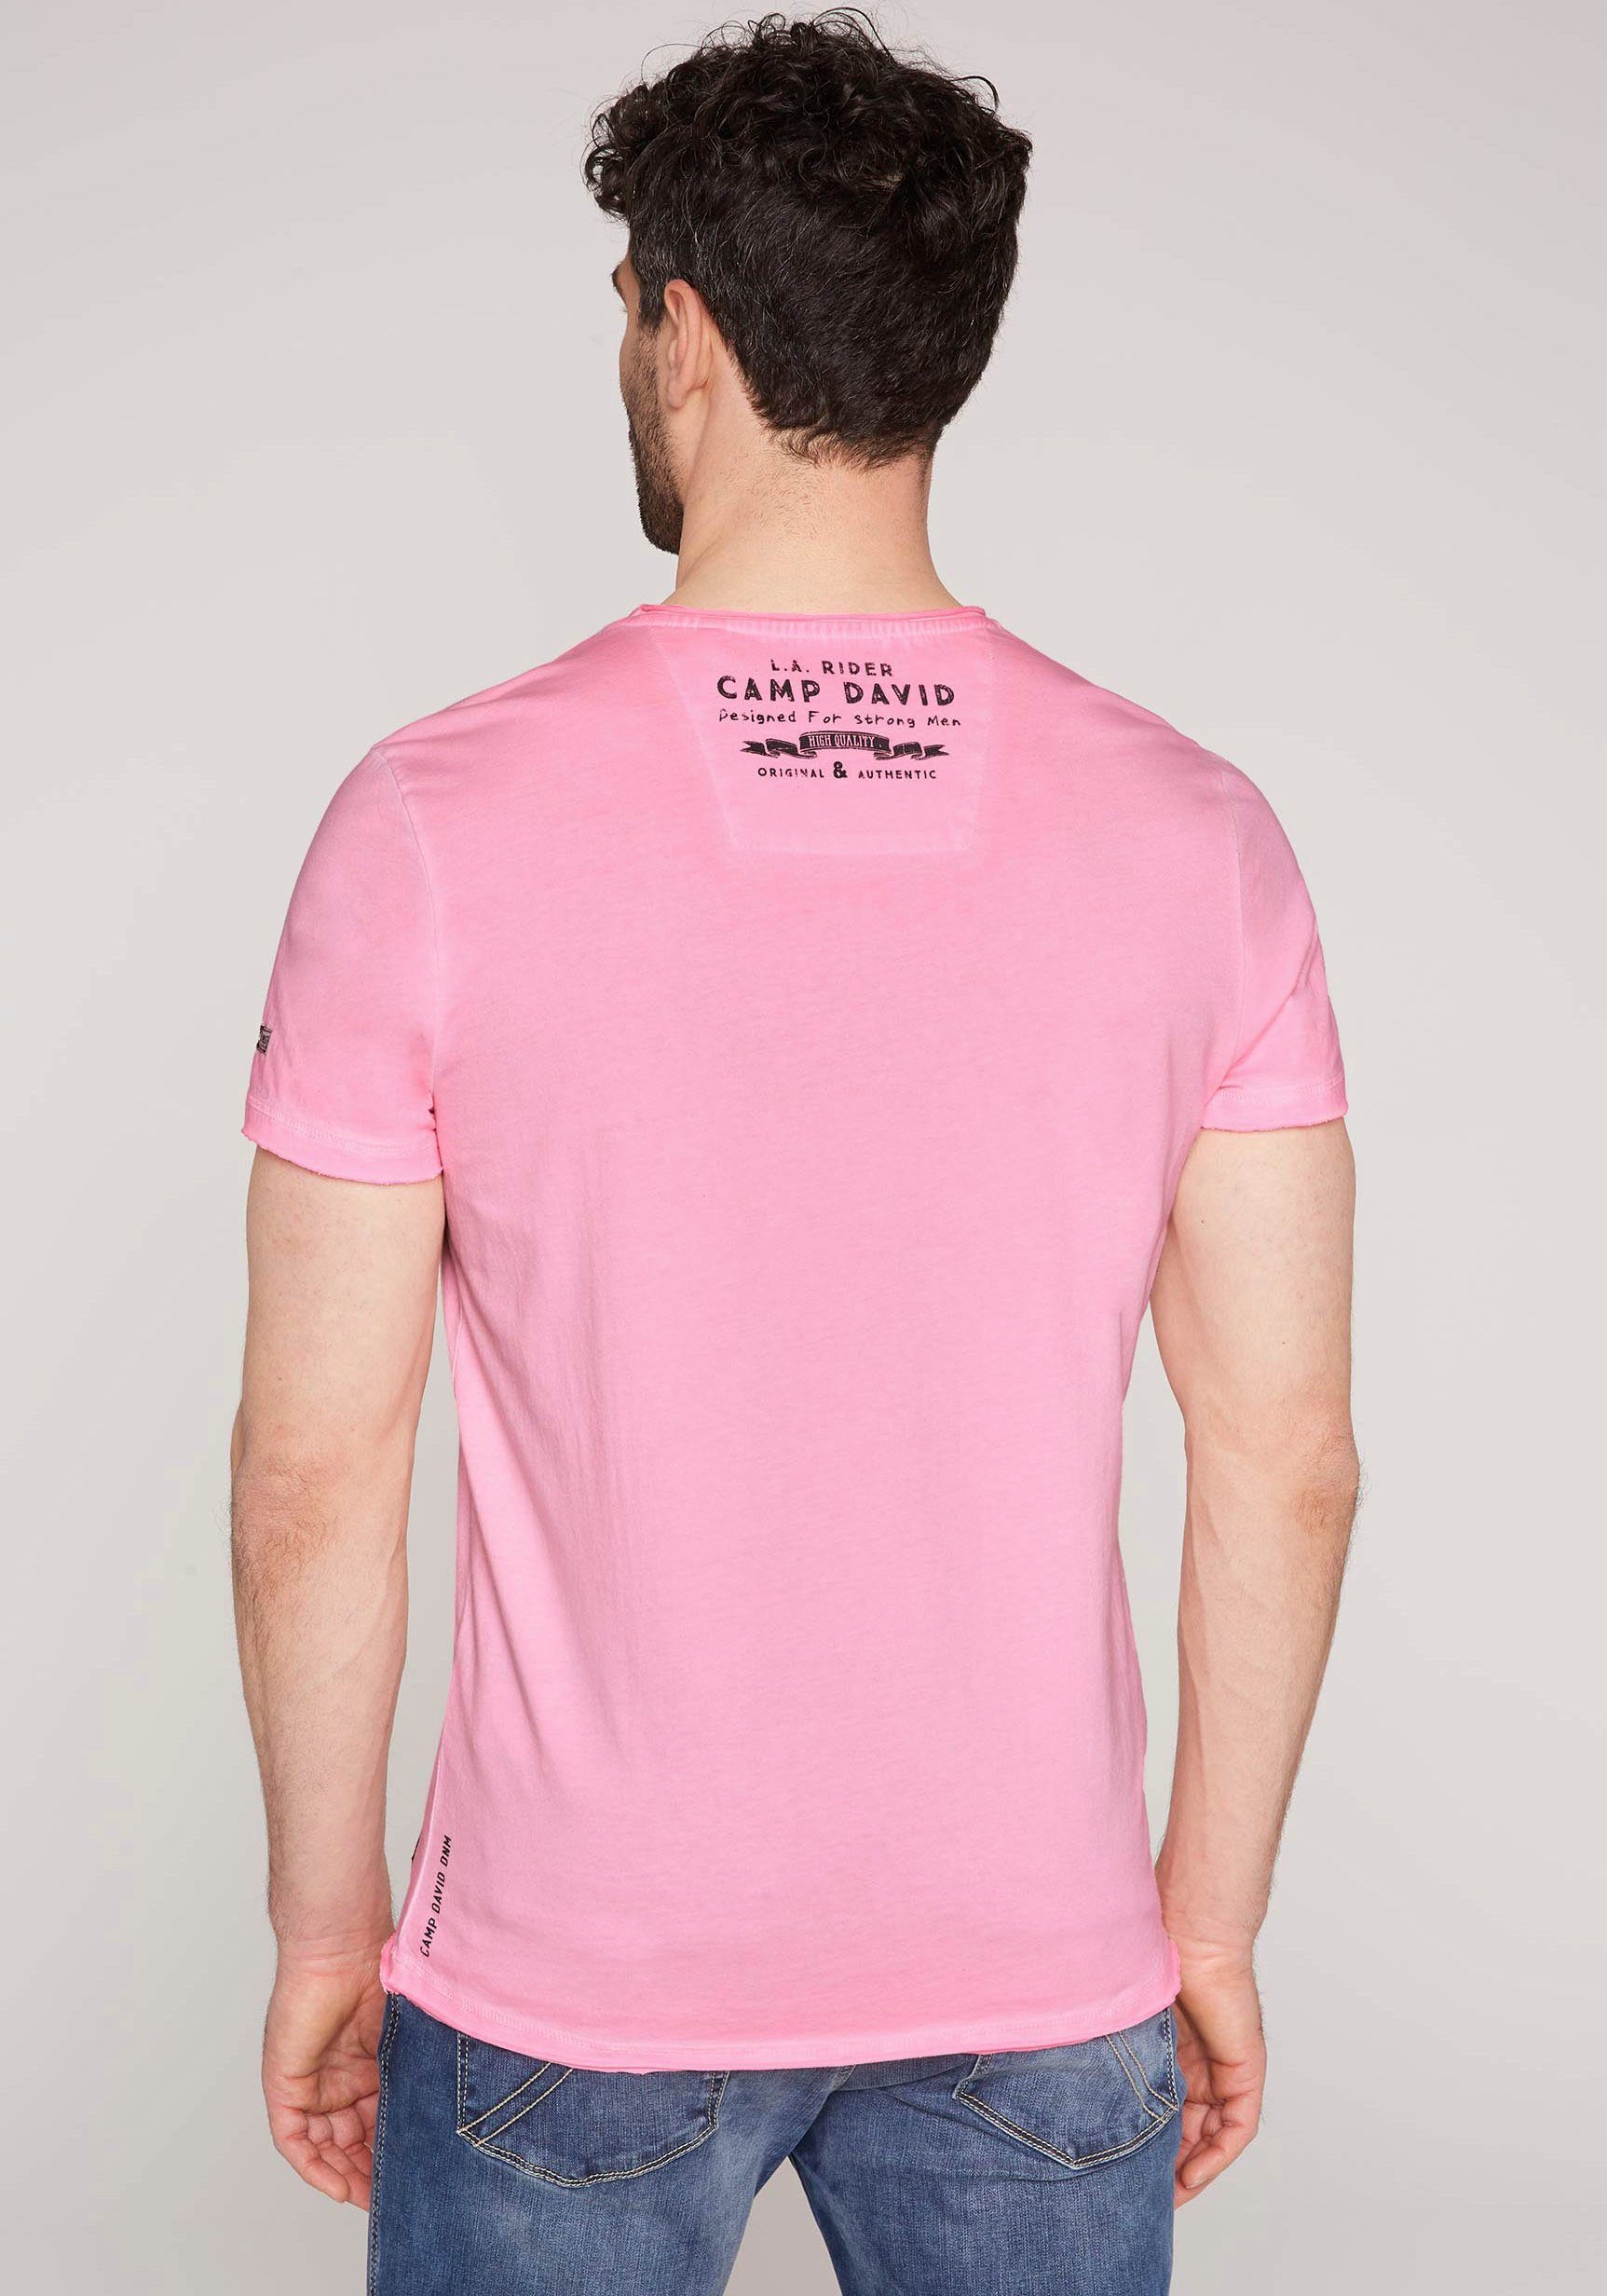 CAMP DAVID T-Shirt pink neon